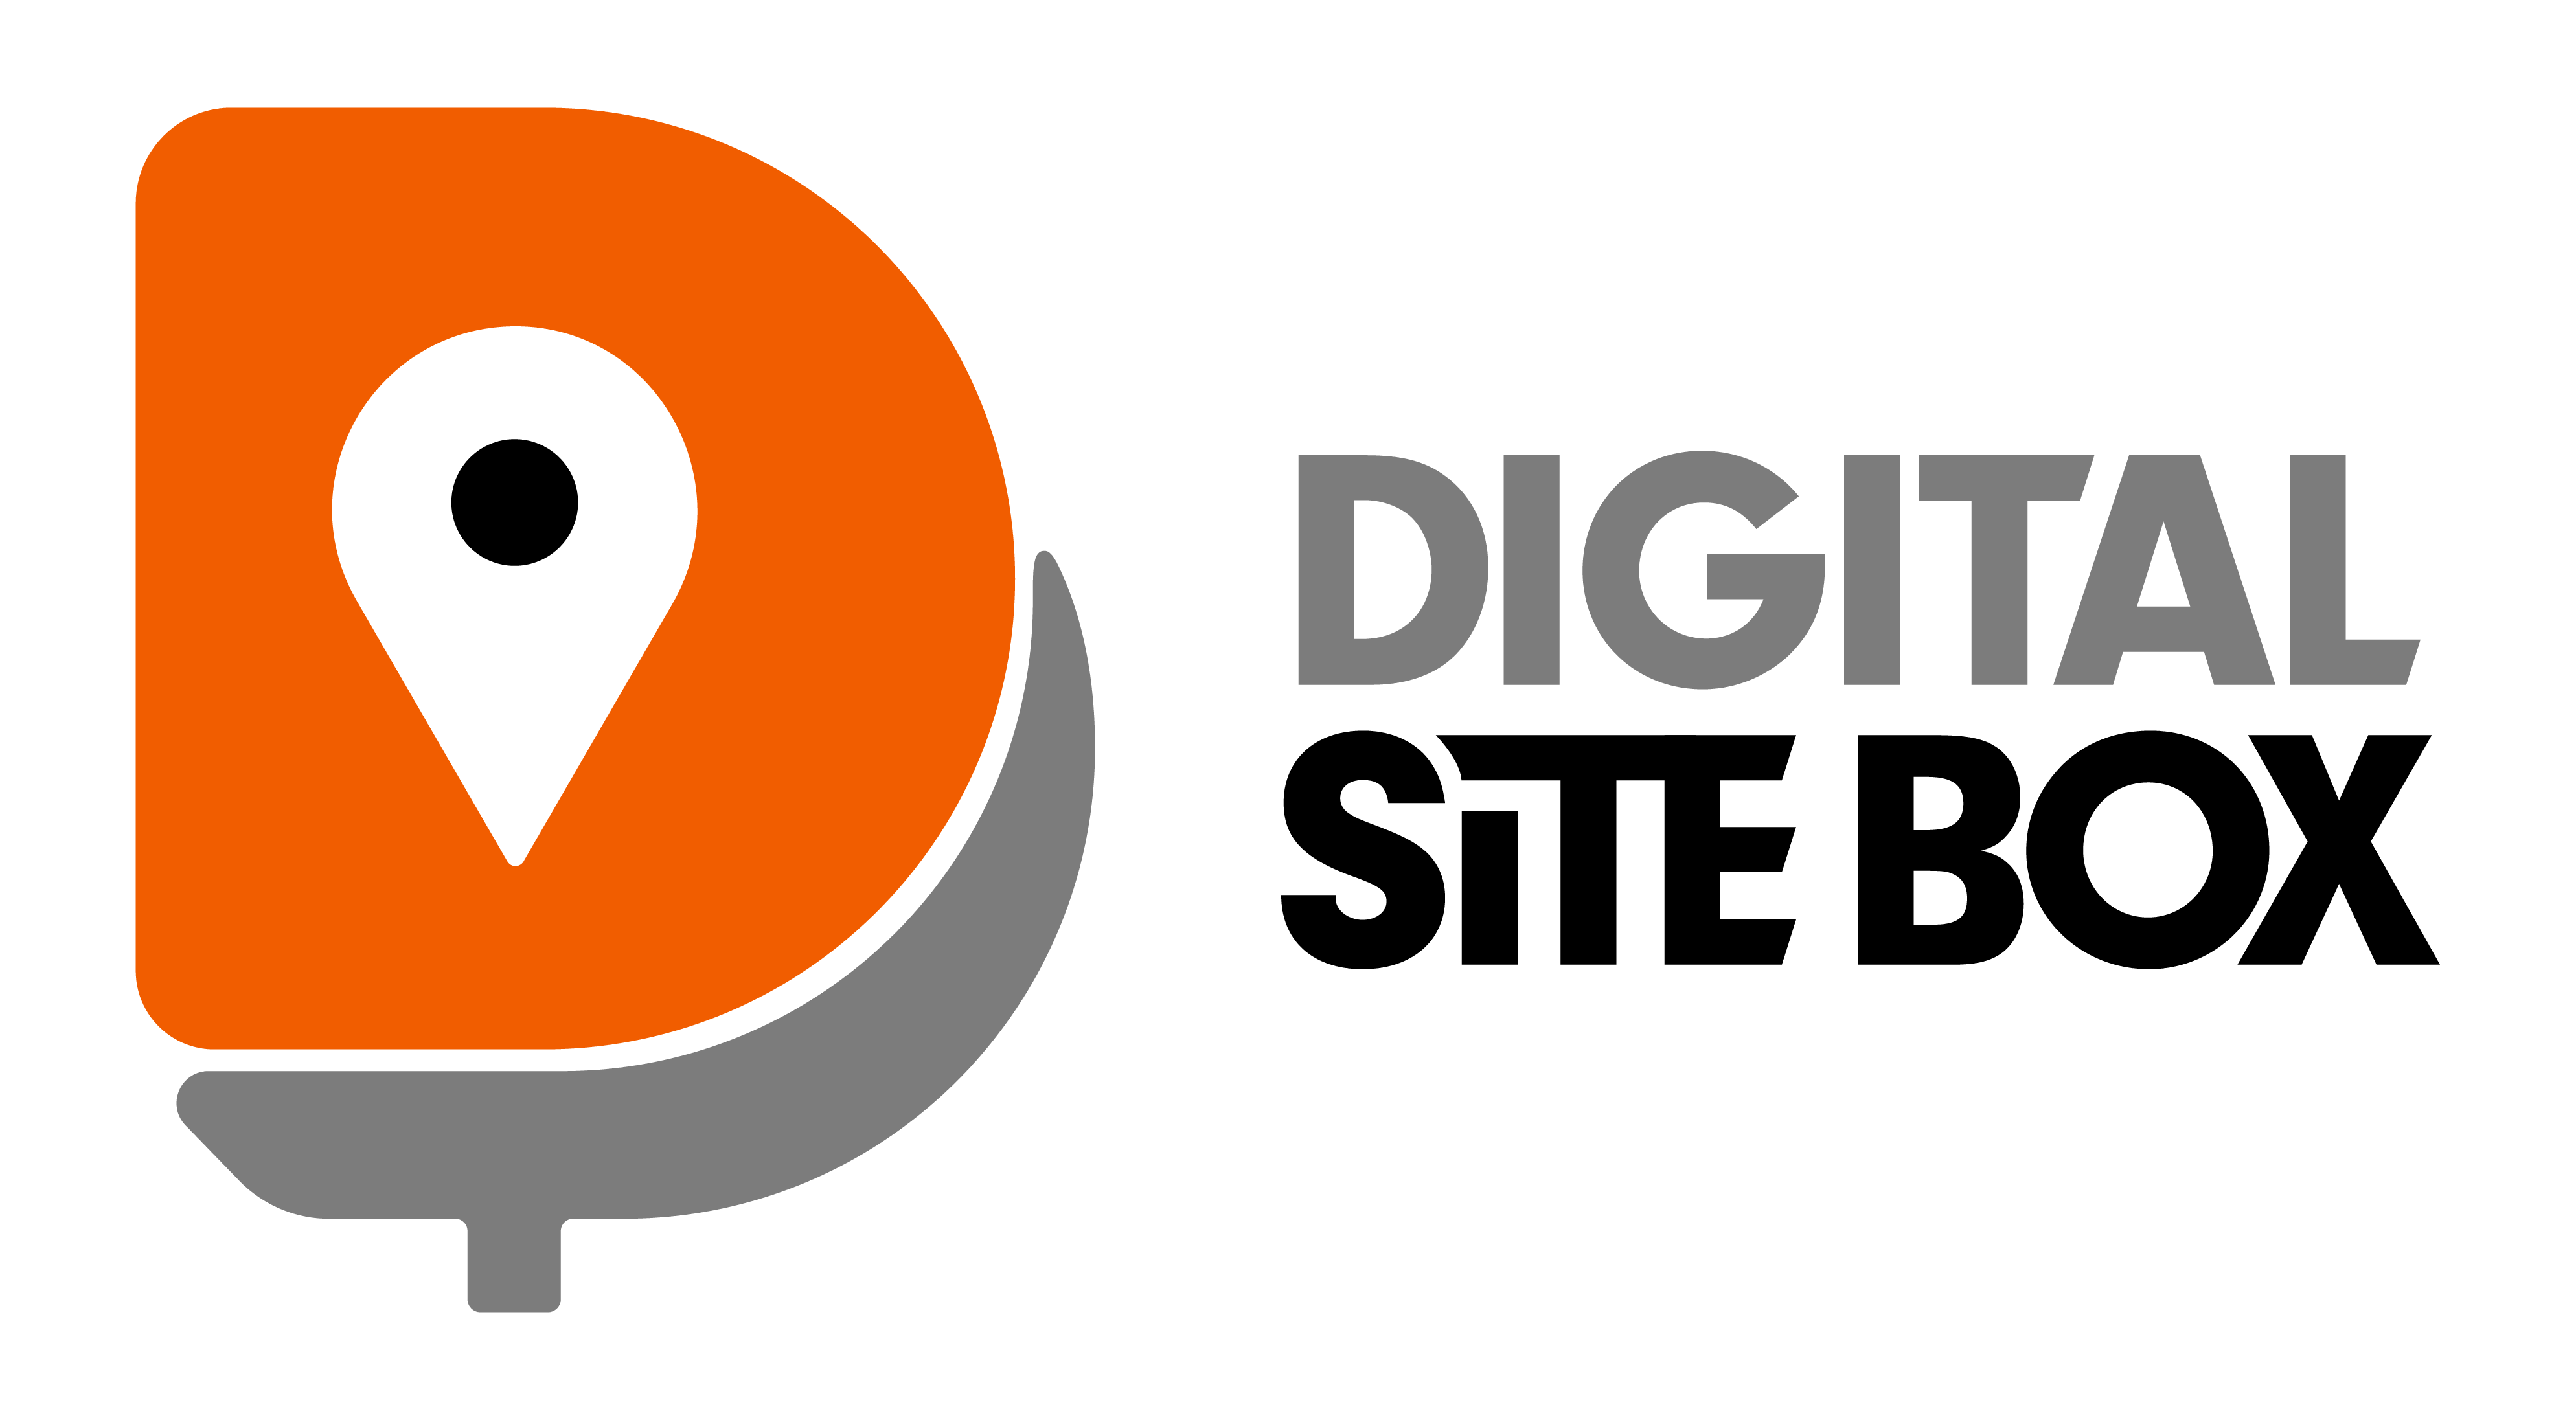 Digital Site Box logo